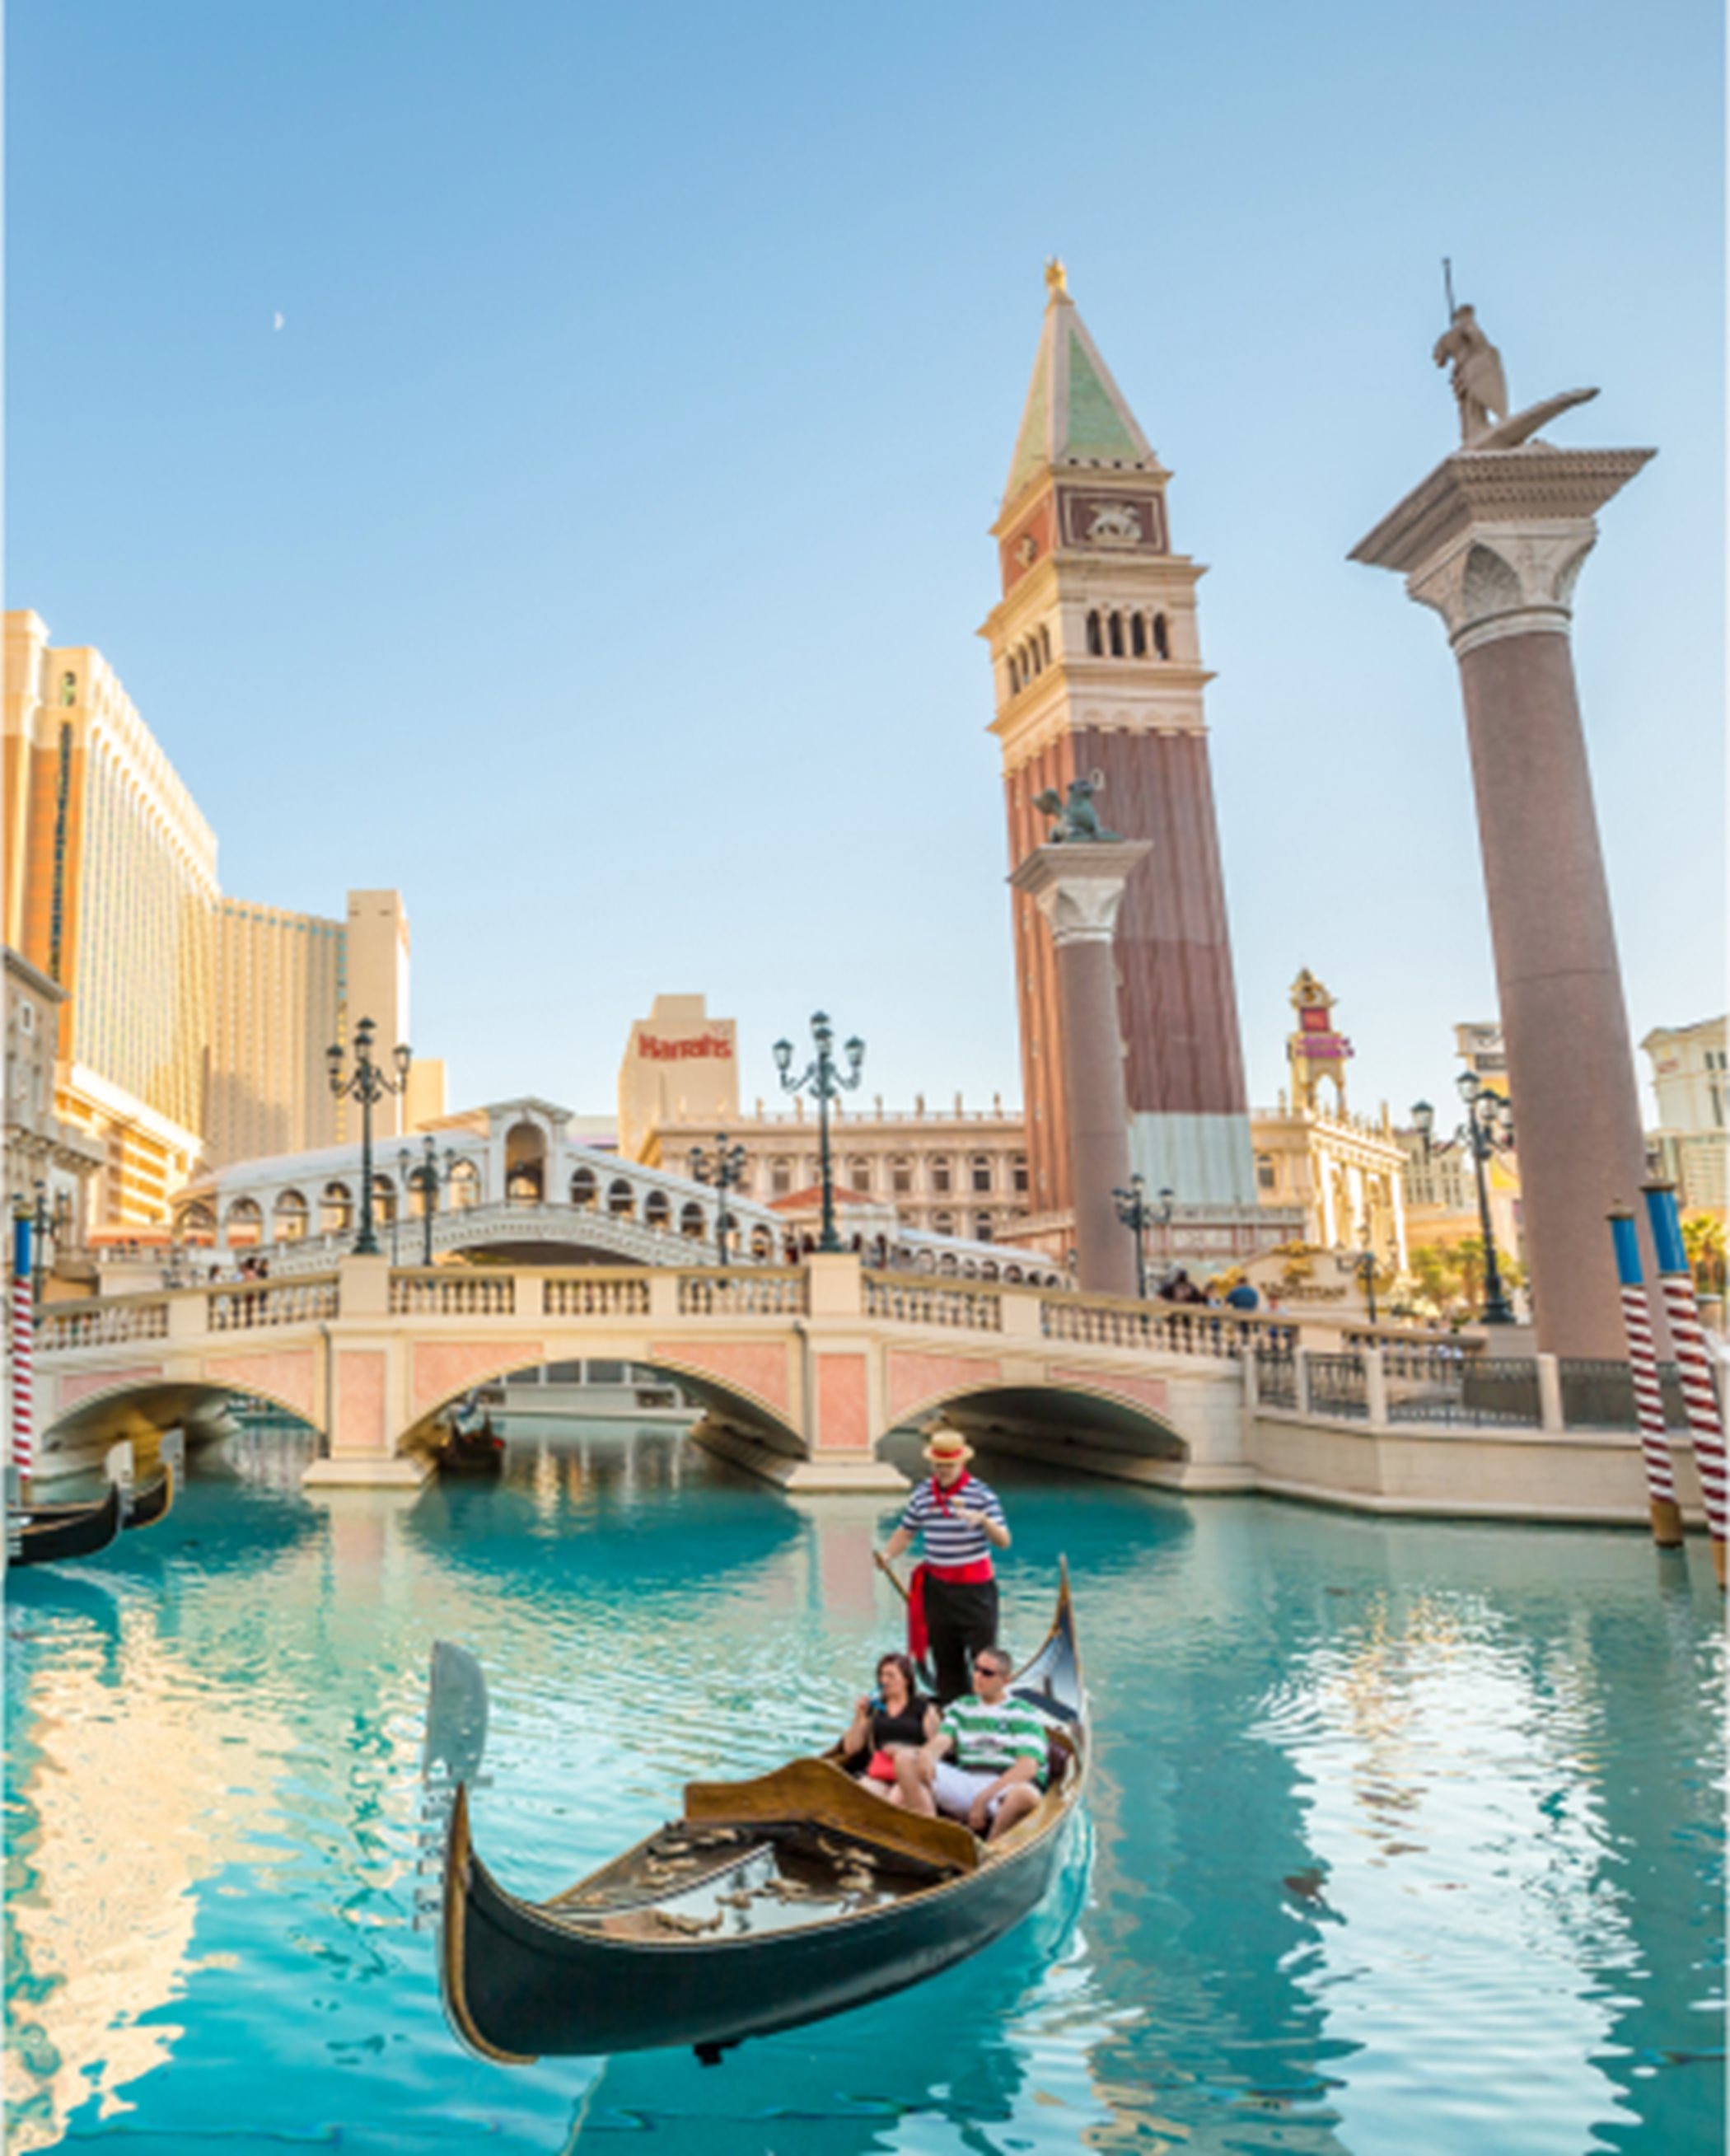 Sunstone Venetian Resort and go for a gondola ride